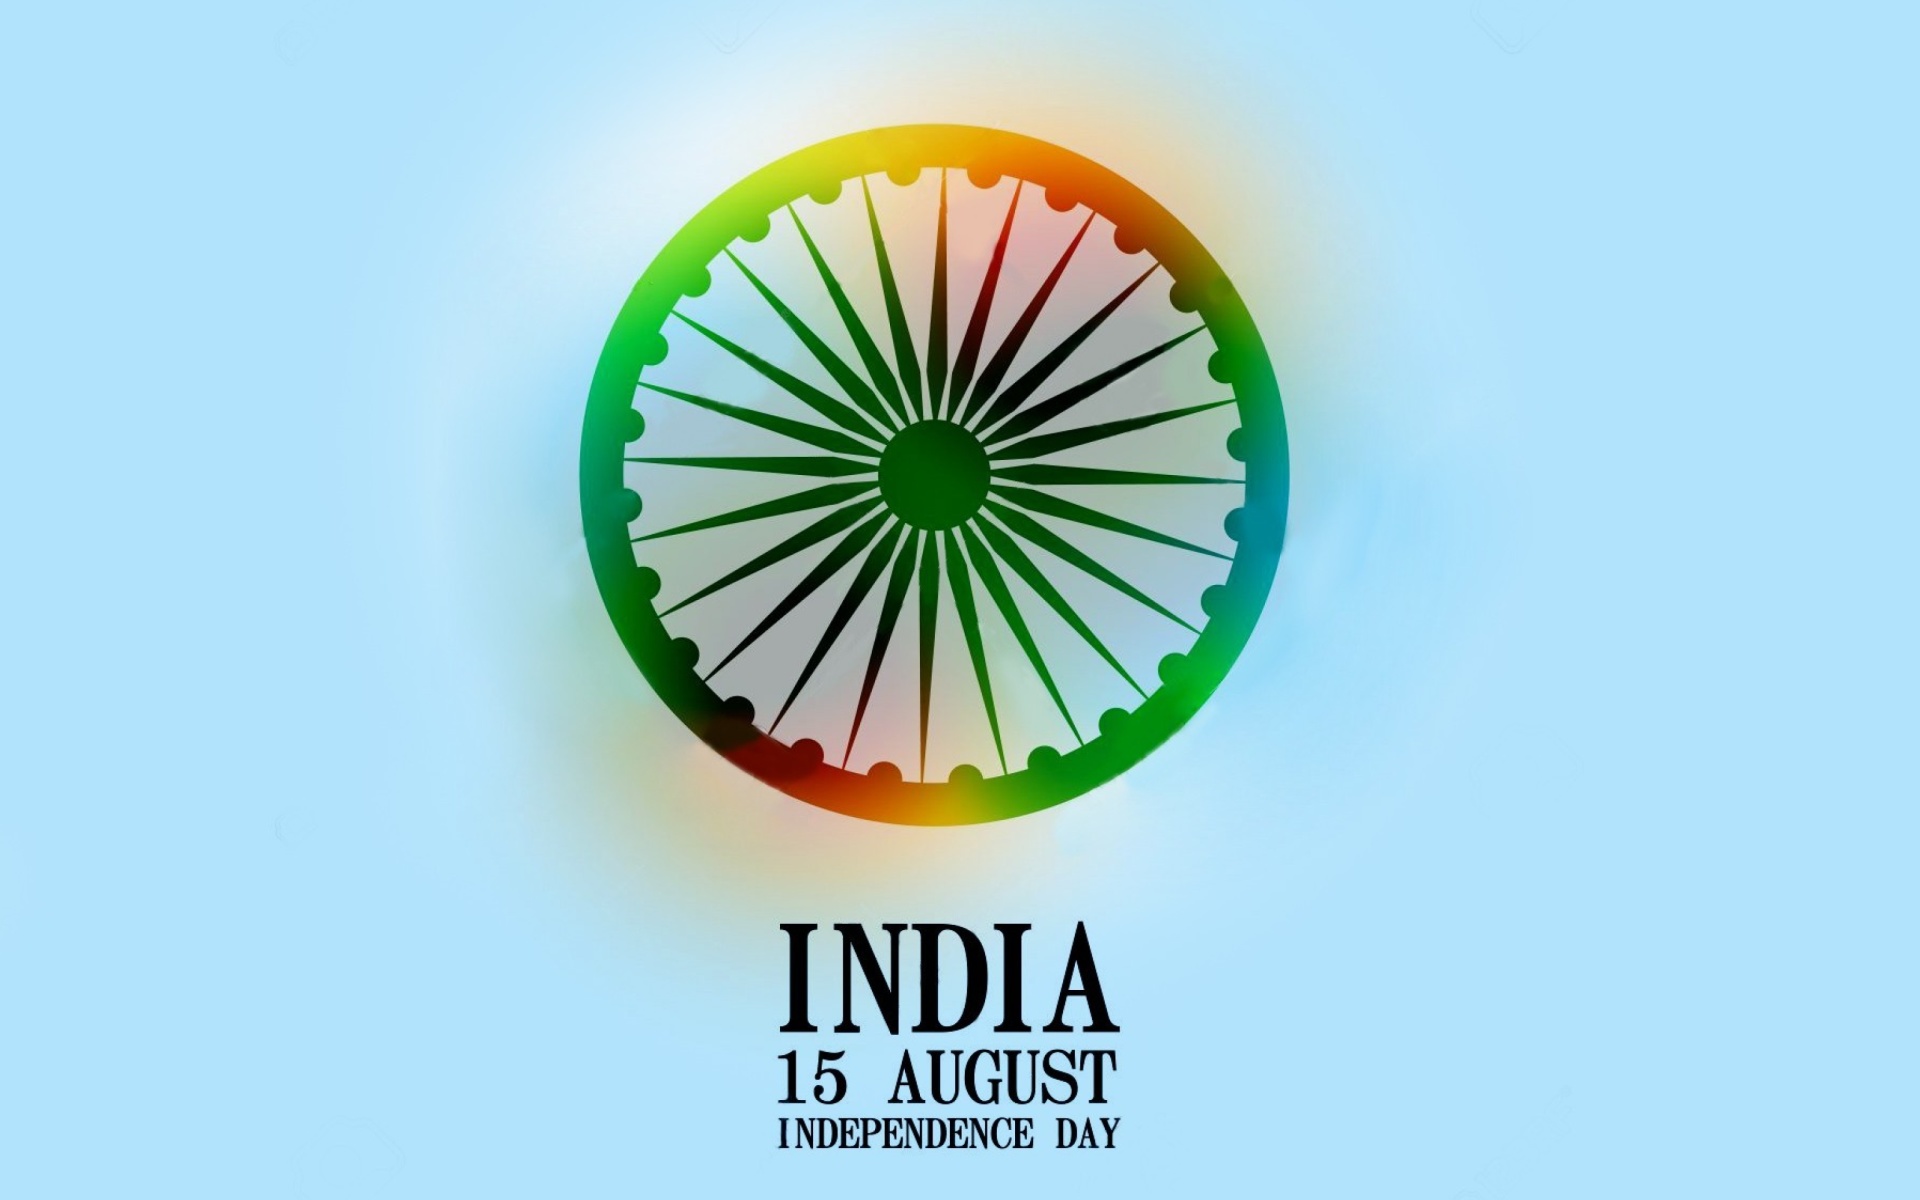 Fondo de pantalla India Independence Day 15 August 1920x1200